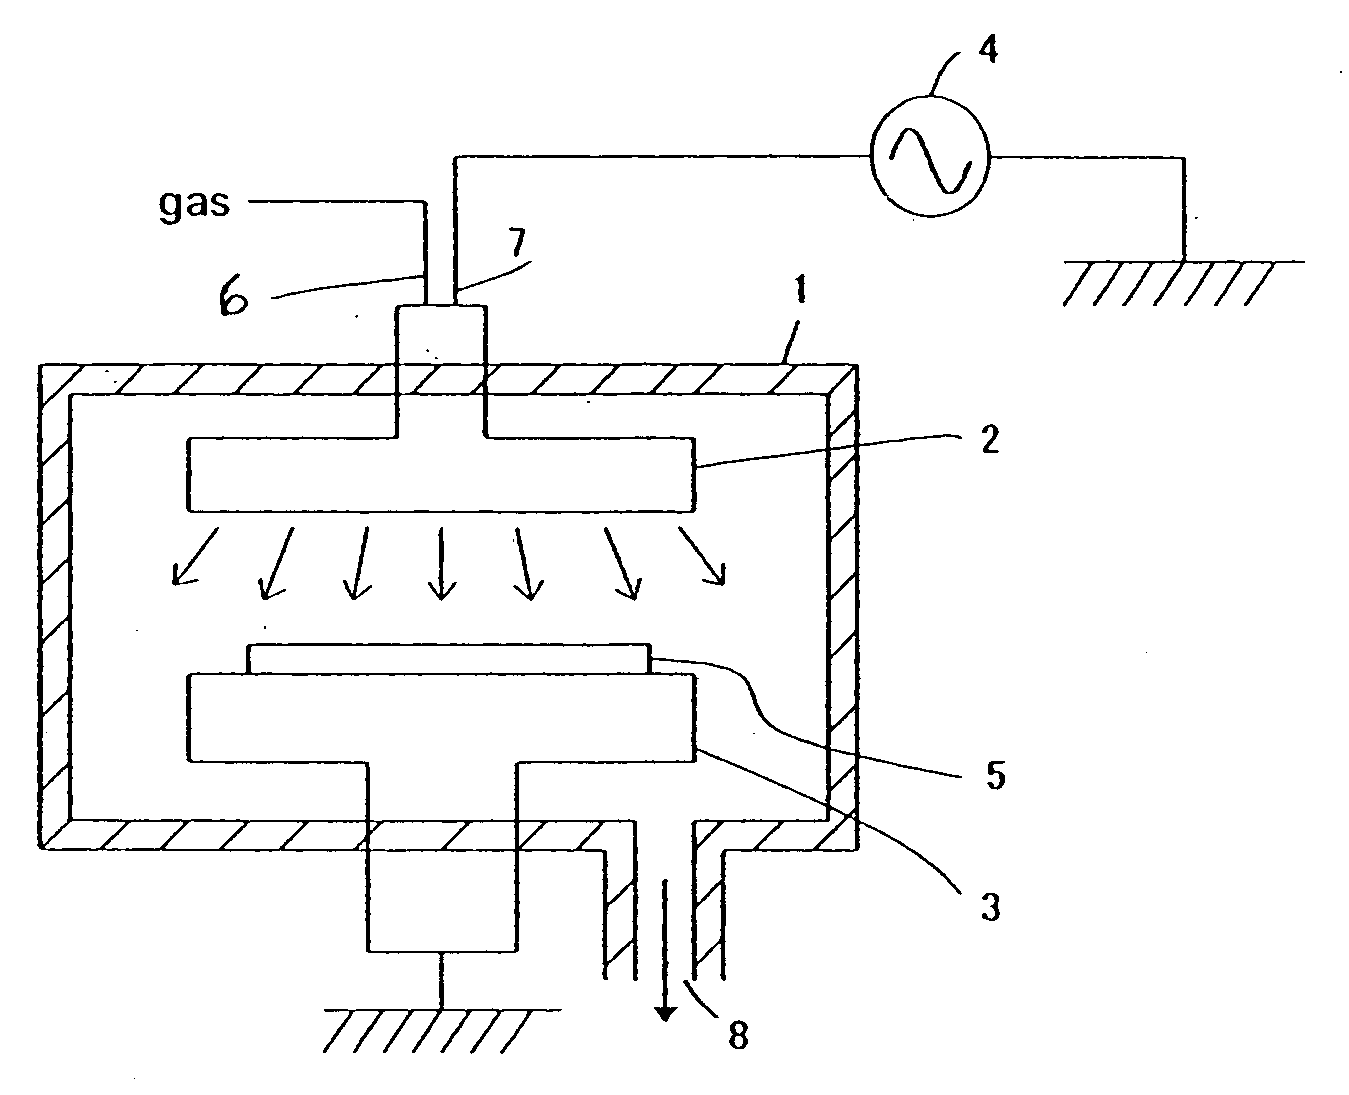 Method for forming insulation film having high density